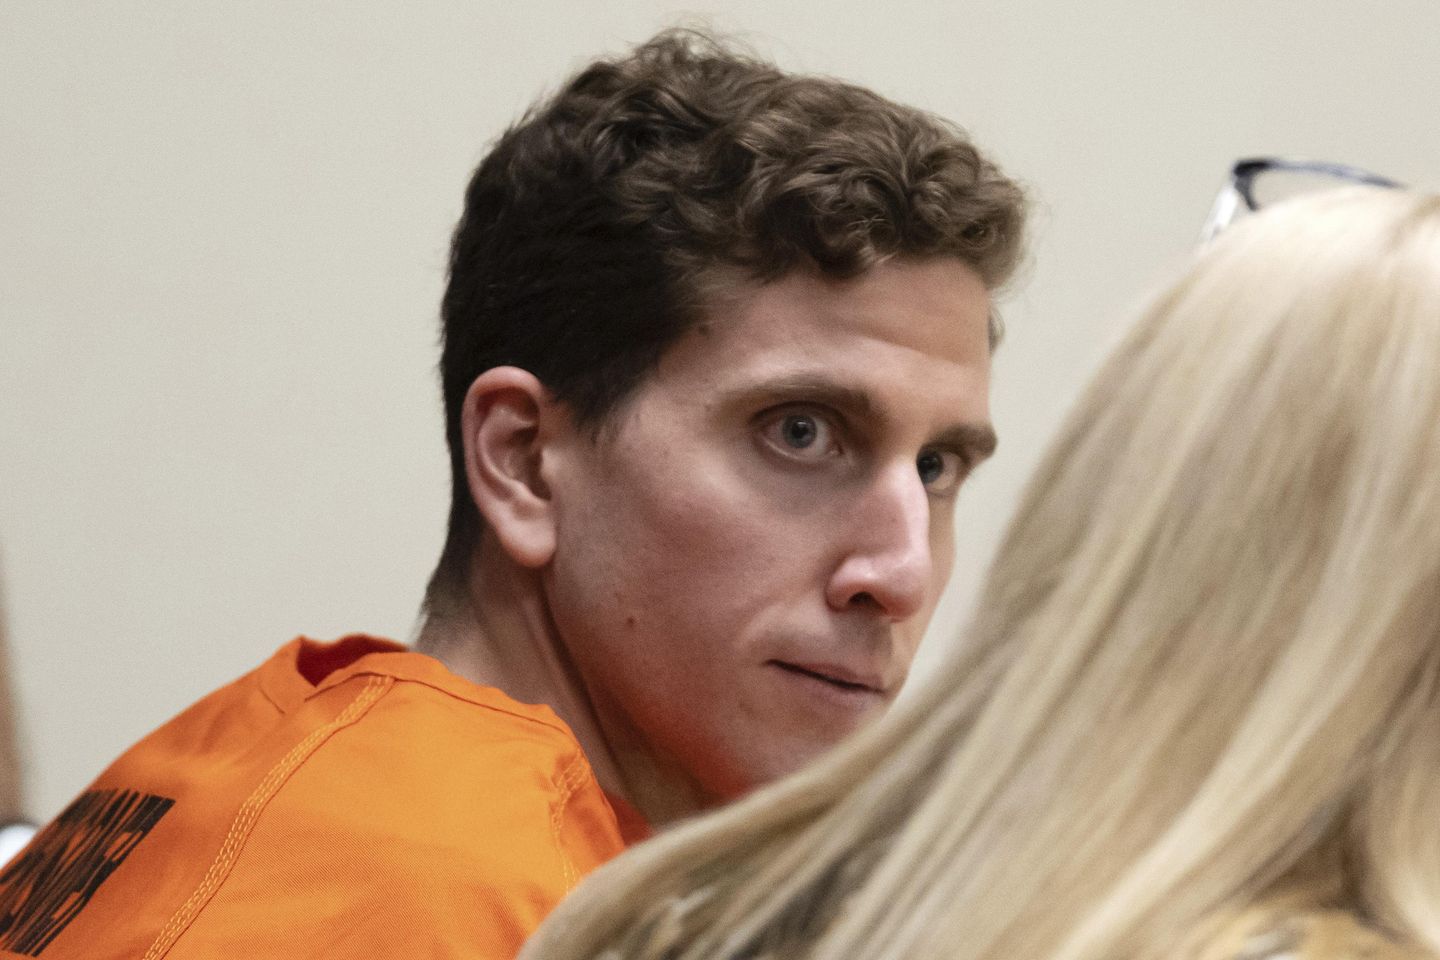 Dylan Mortensen, teman sekamar pembunuh Idaho, memasuki ‘fase kejutan beku’ setelah menyaksikan pembunuh